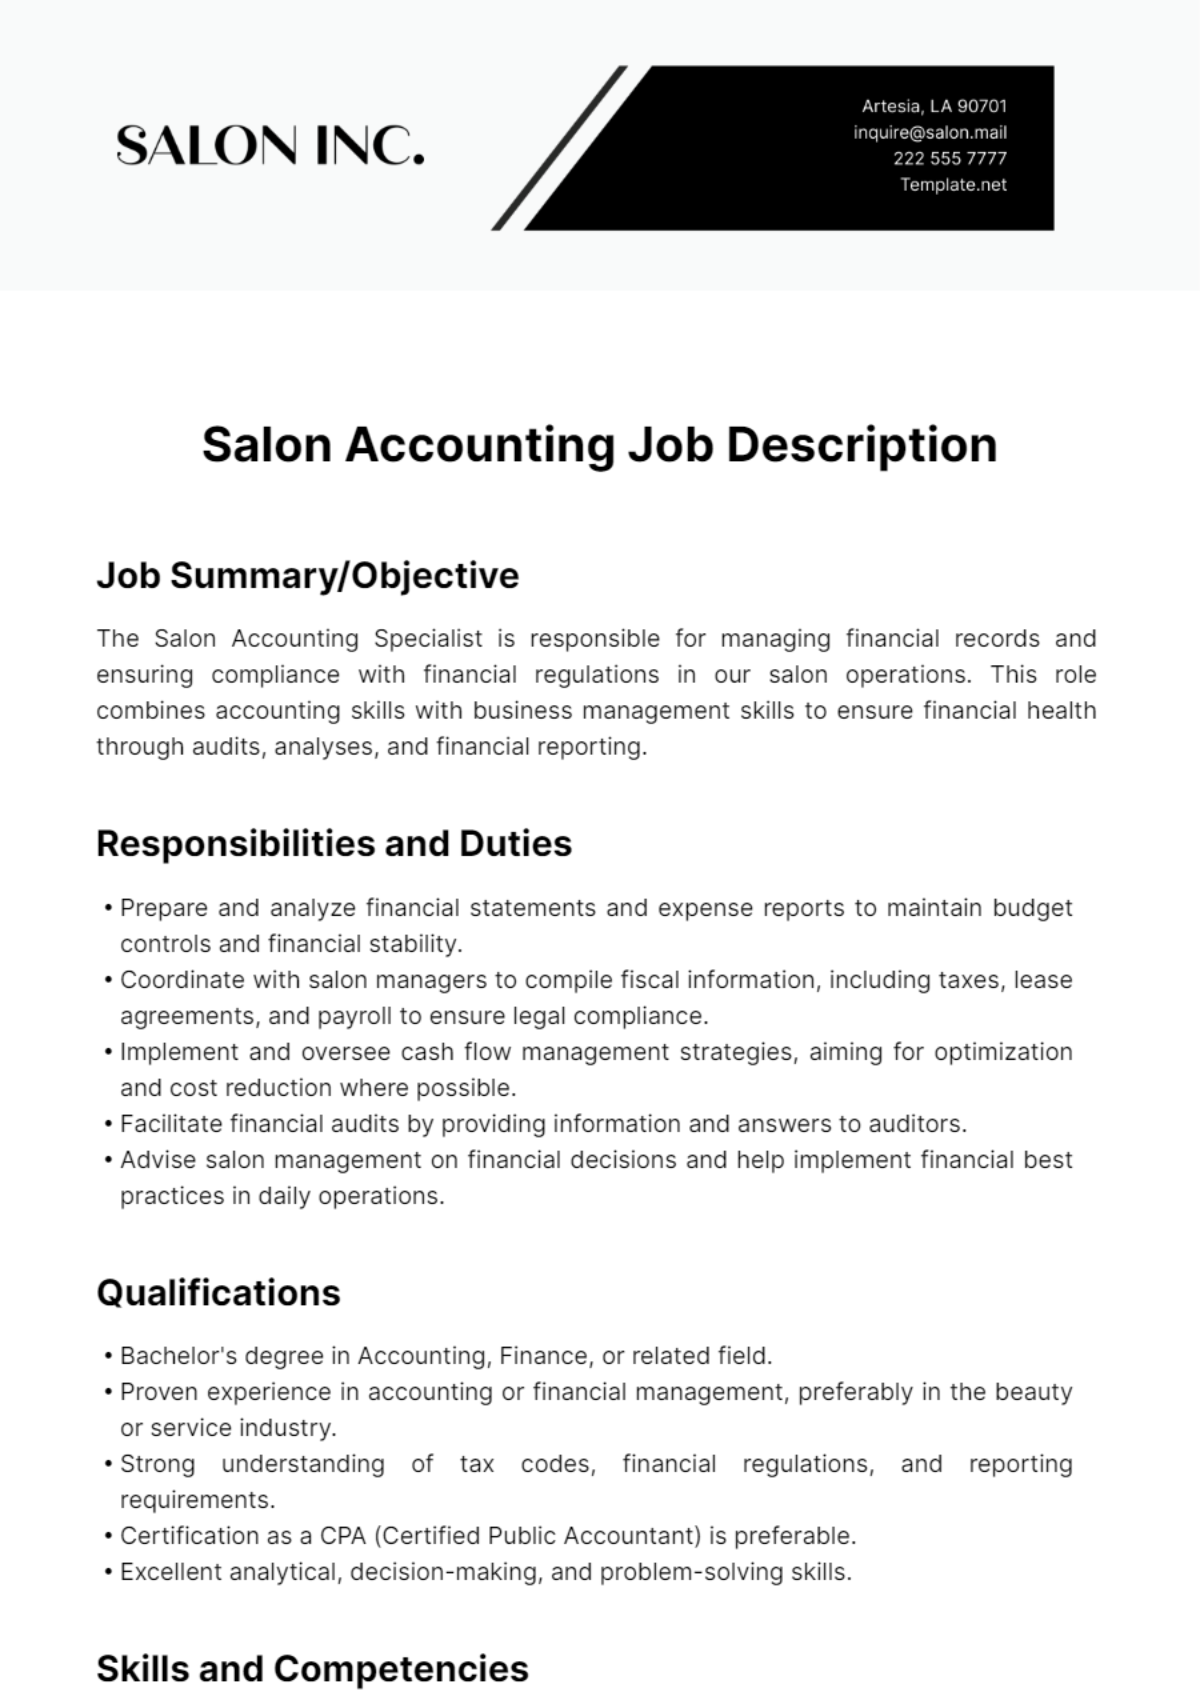 Salon Accounting Job Description Template